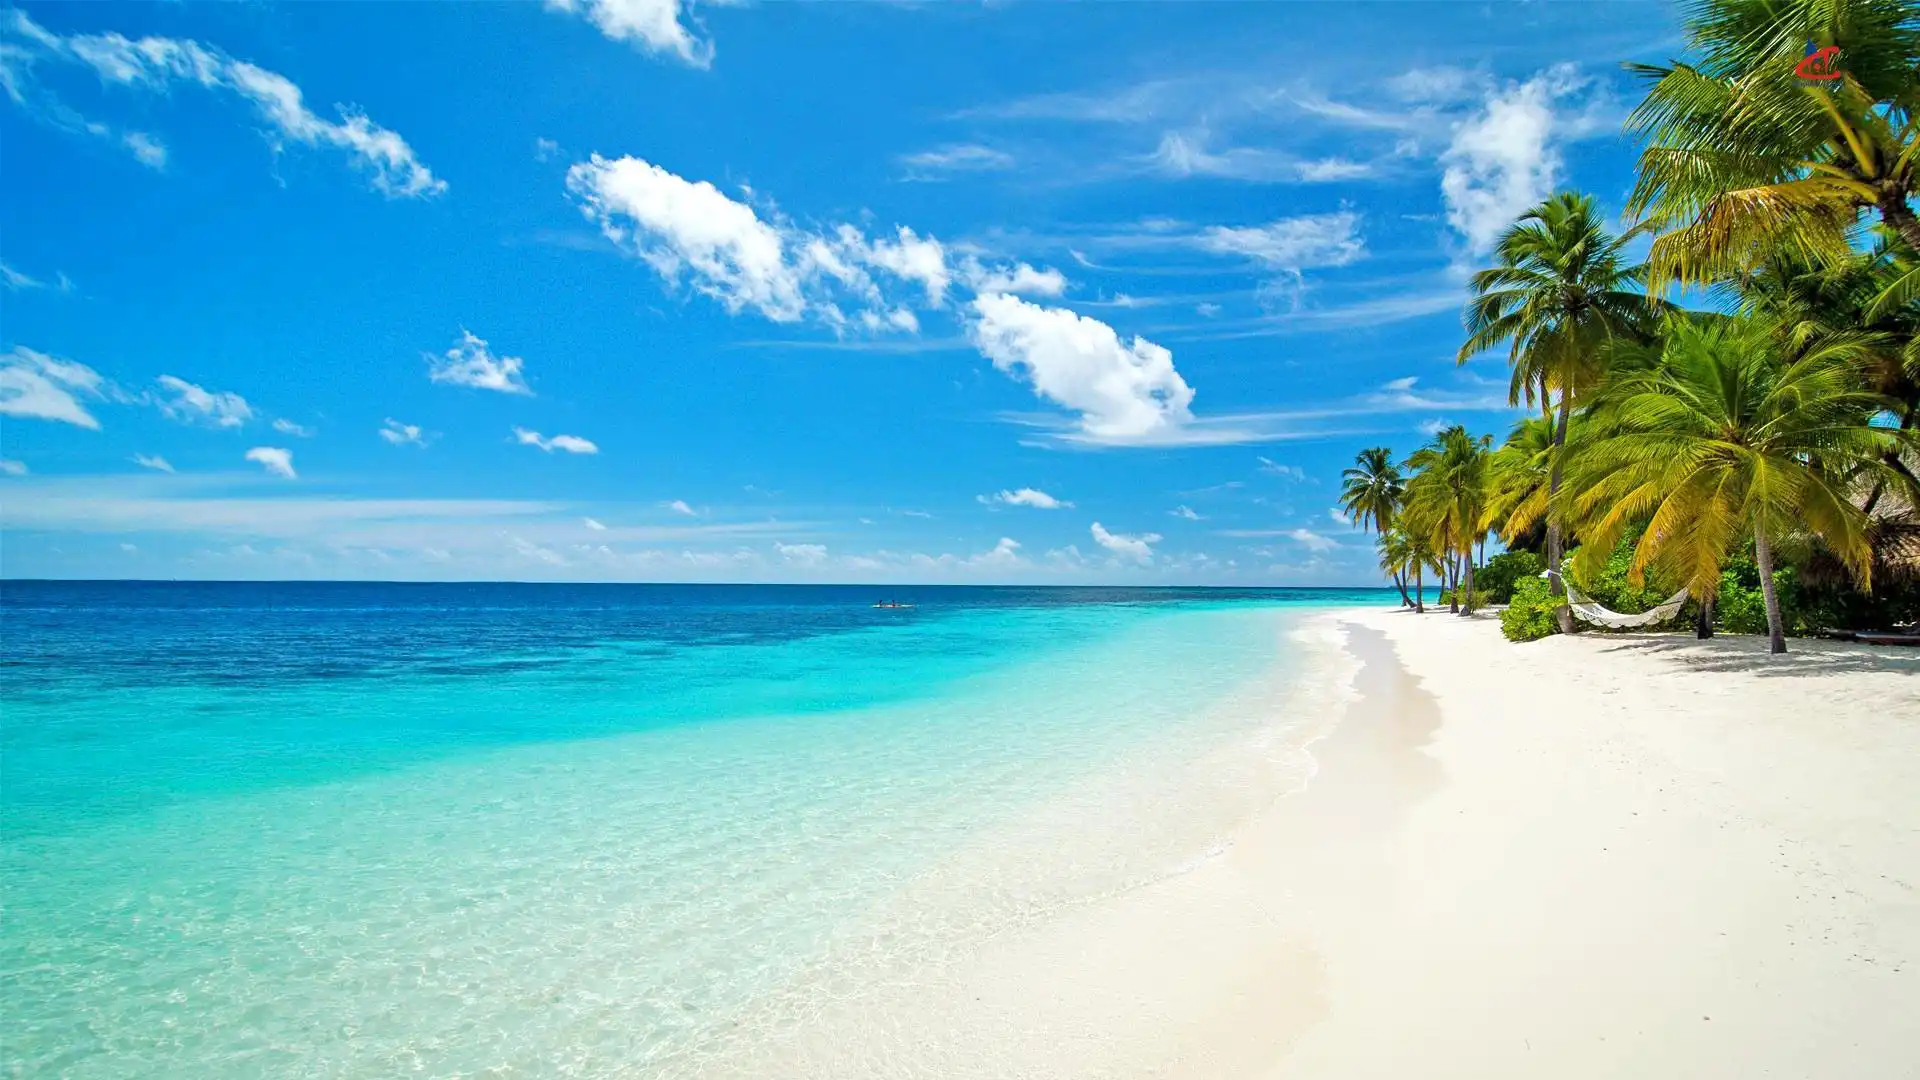 Mirihi Island Resort Maldives beach